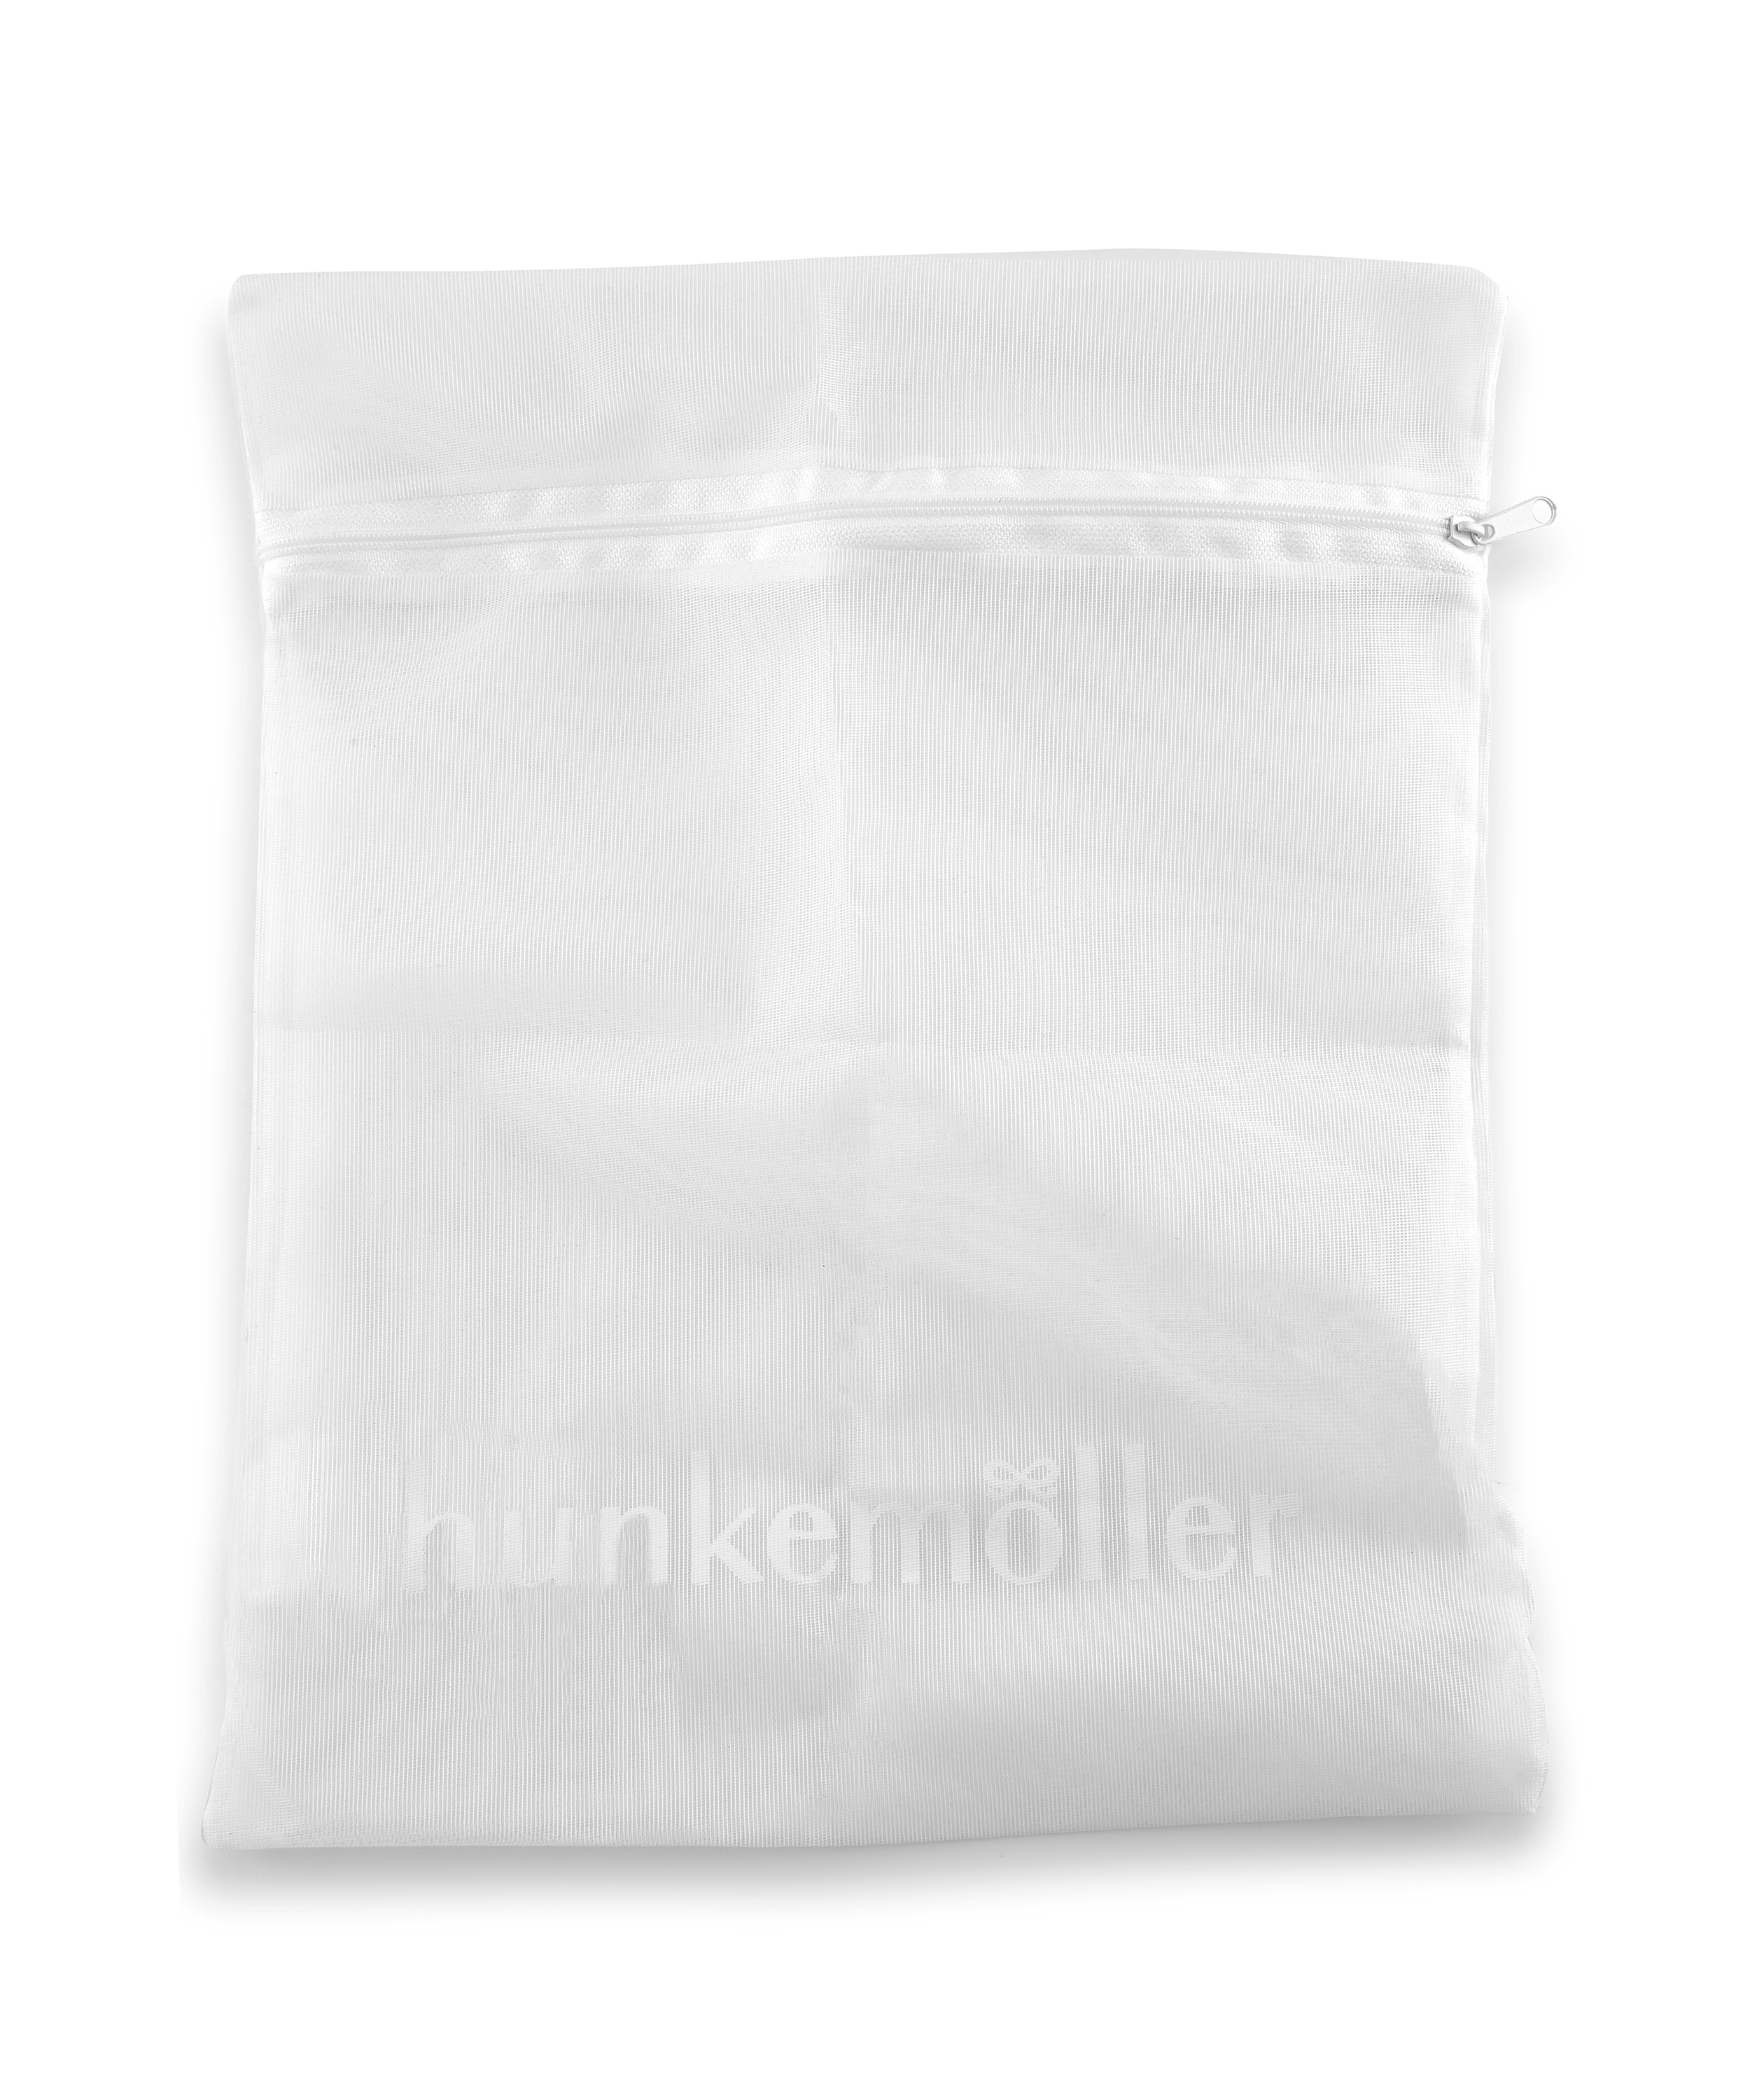 Hosiery bag zipper, White, main